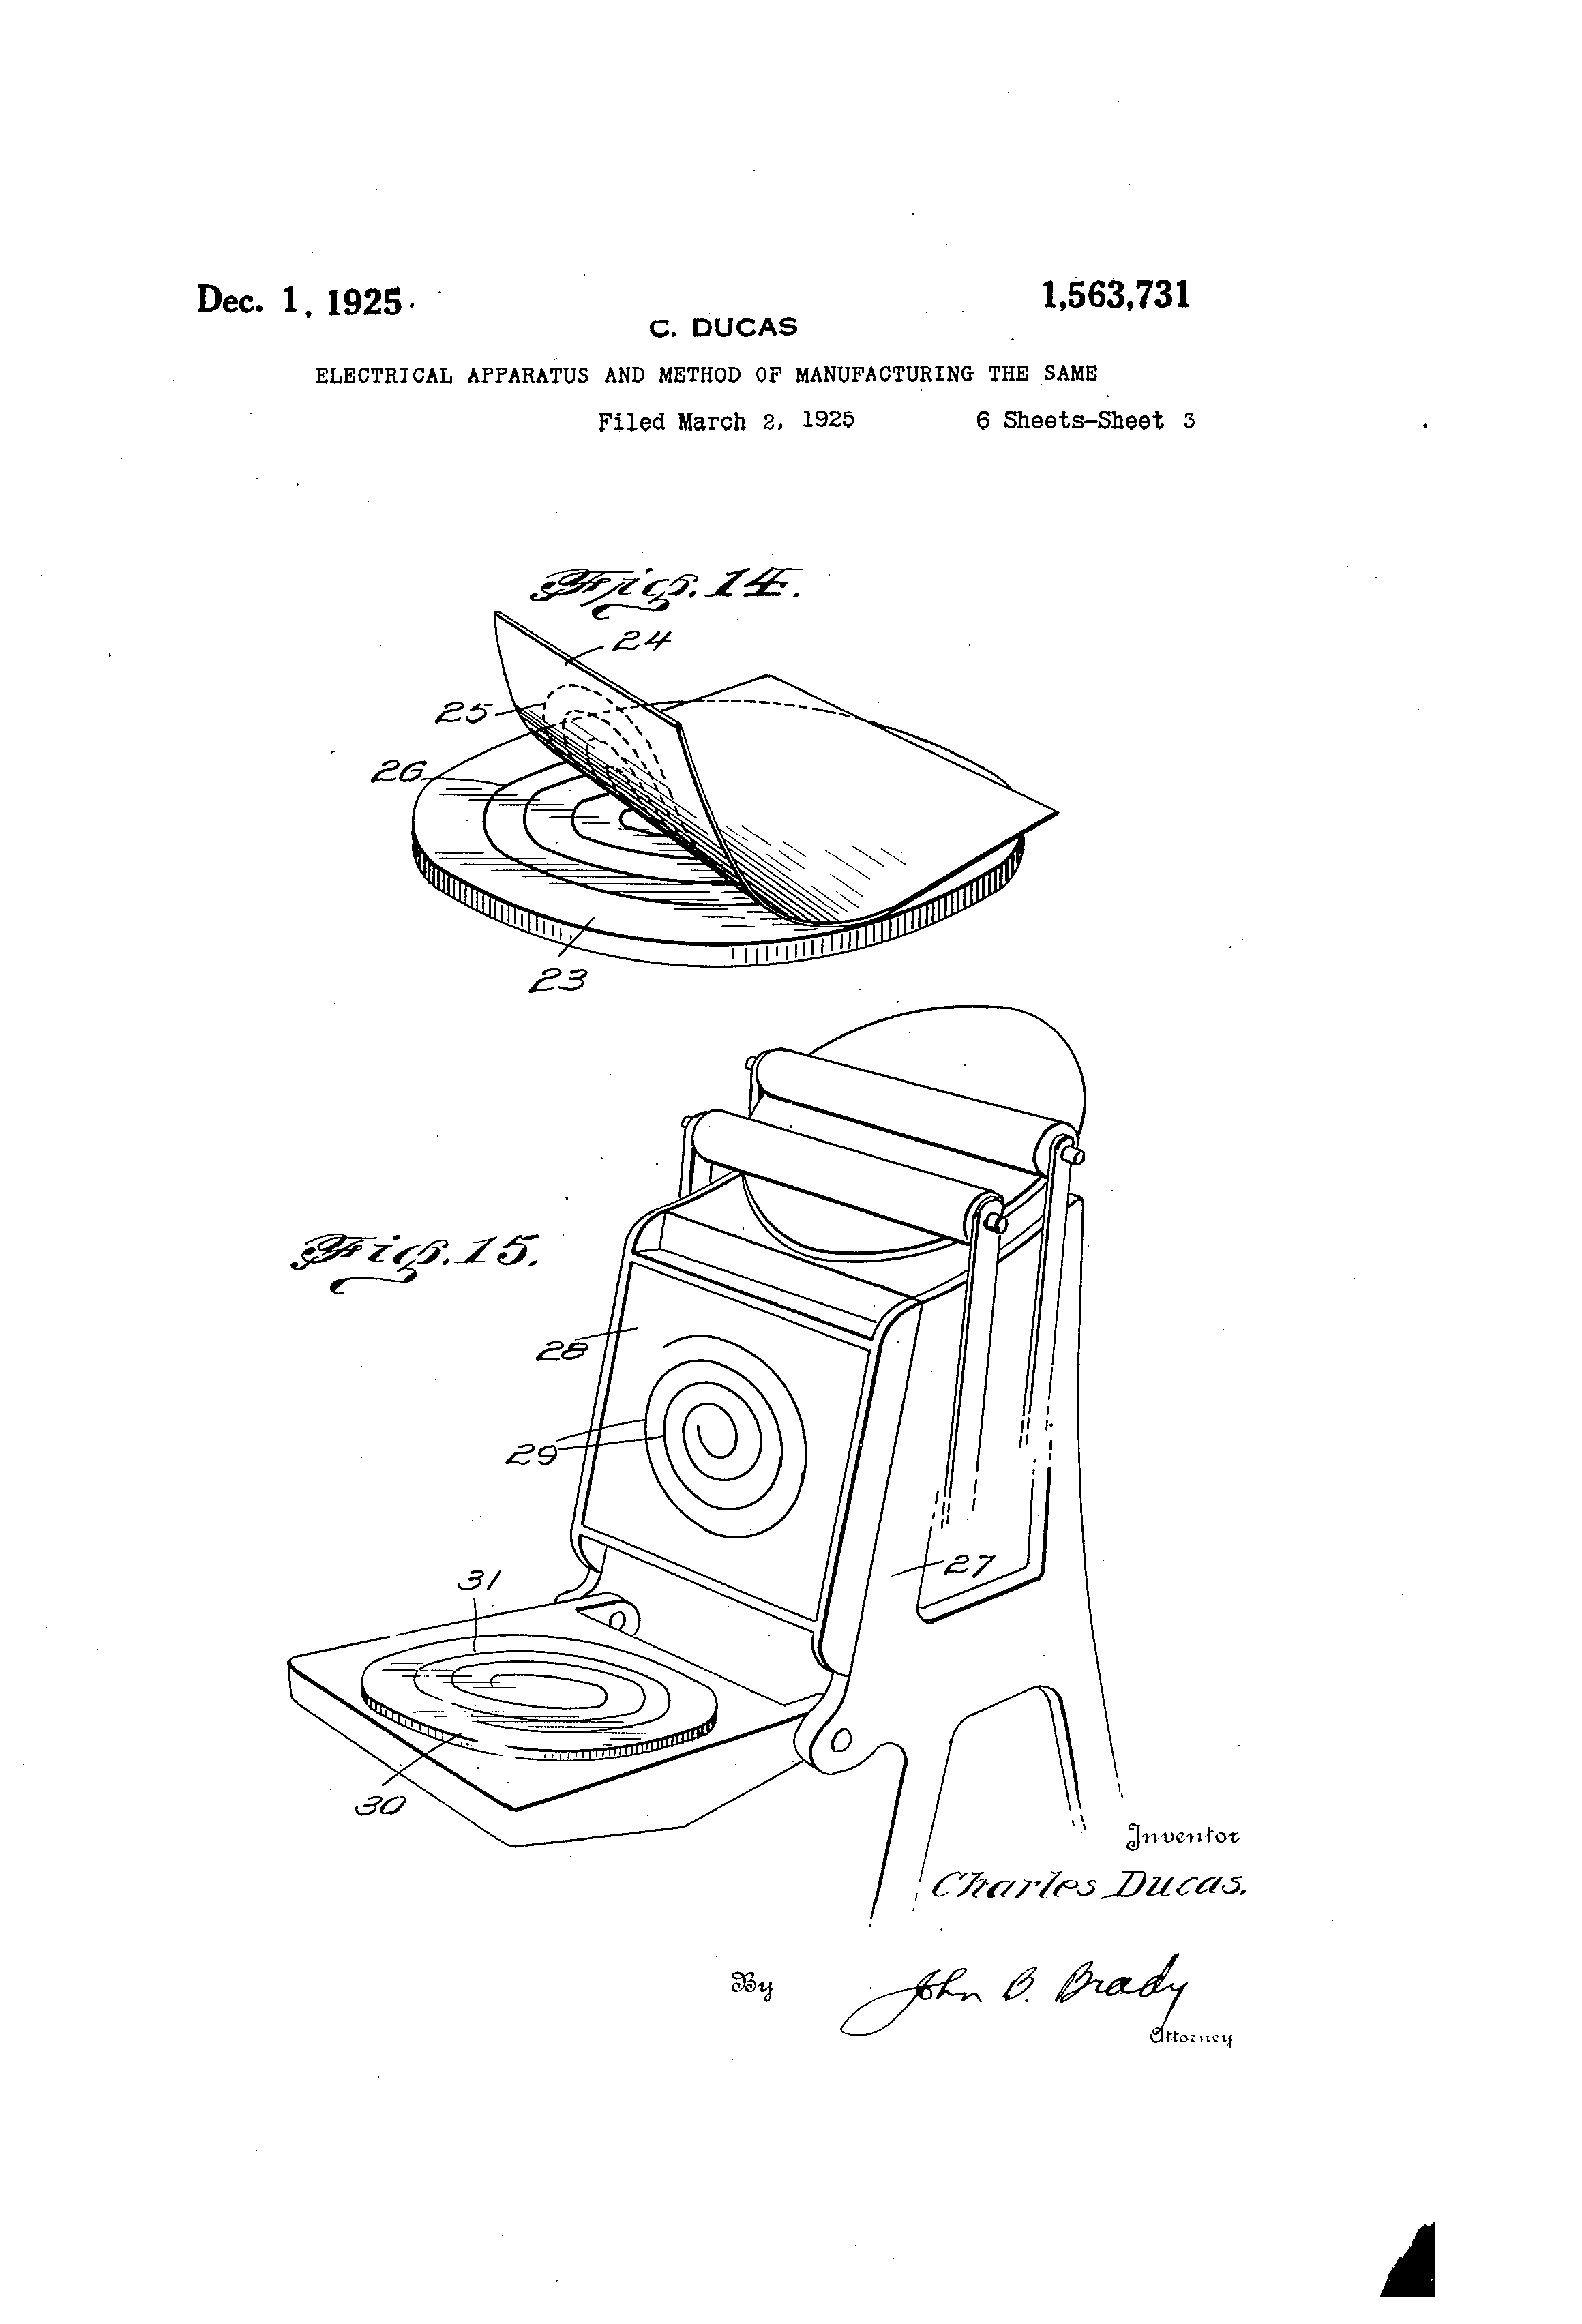 charles-ducas-patent-drawing